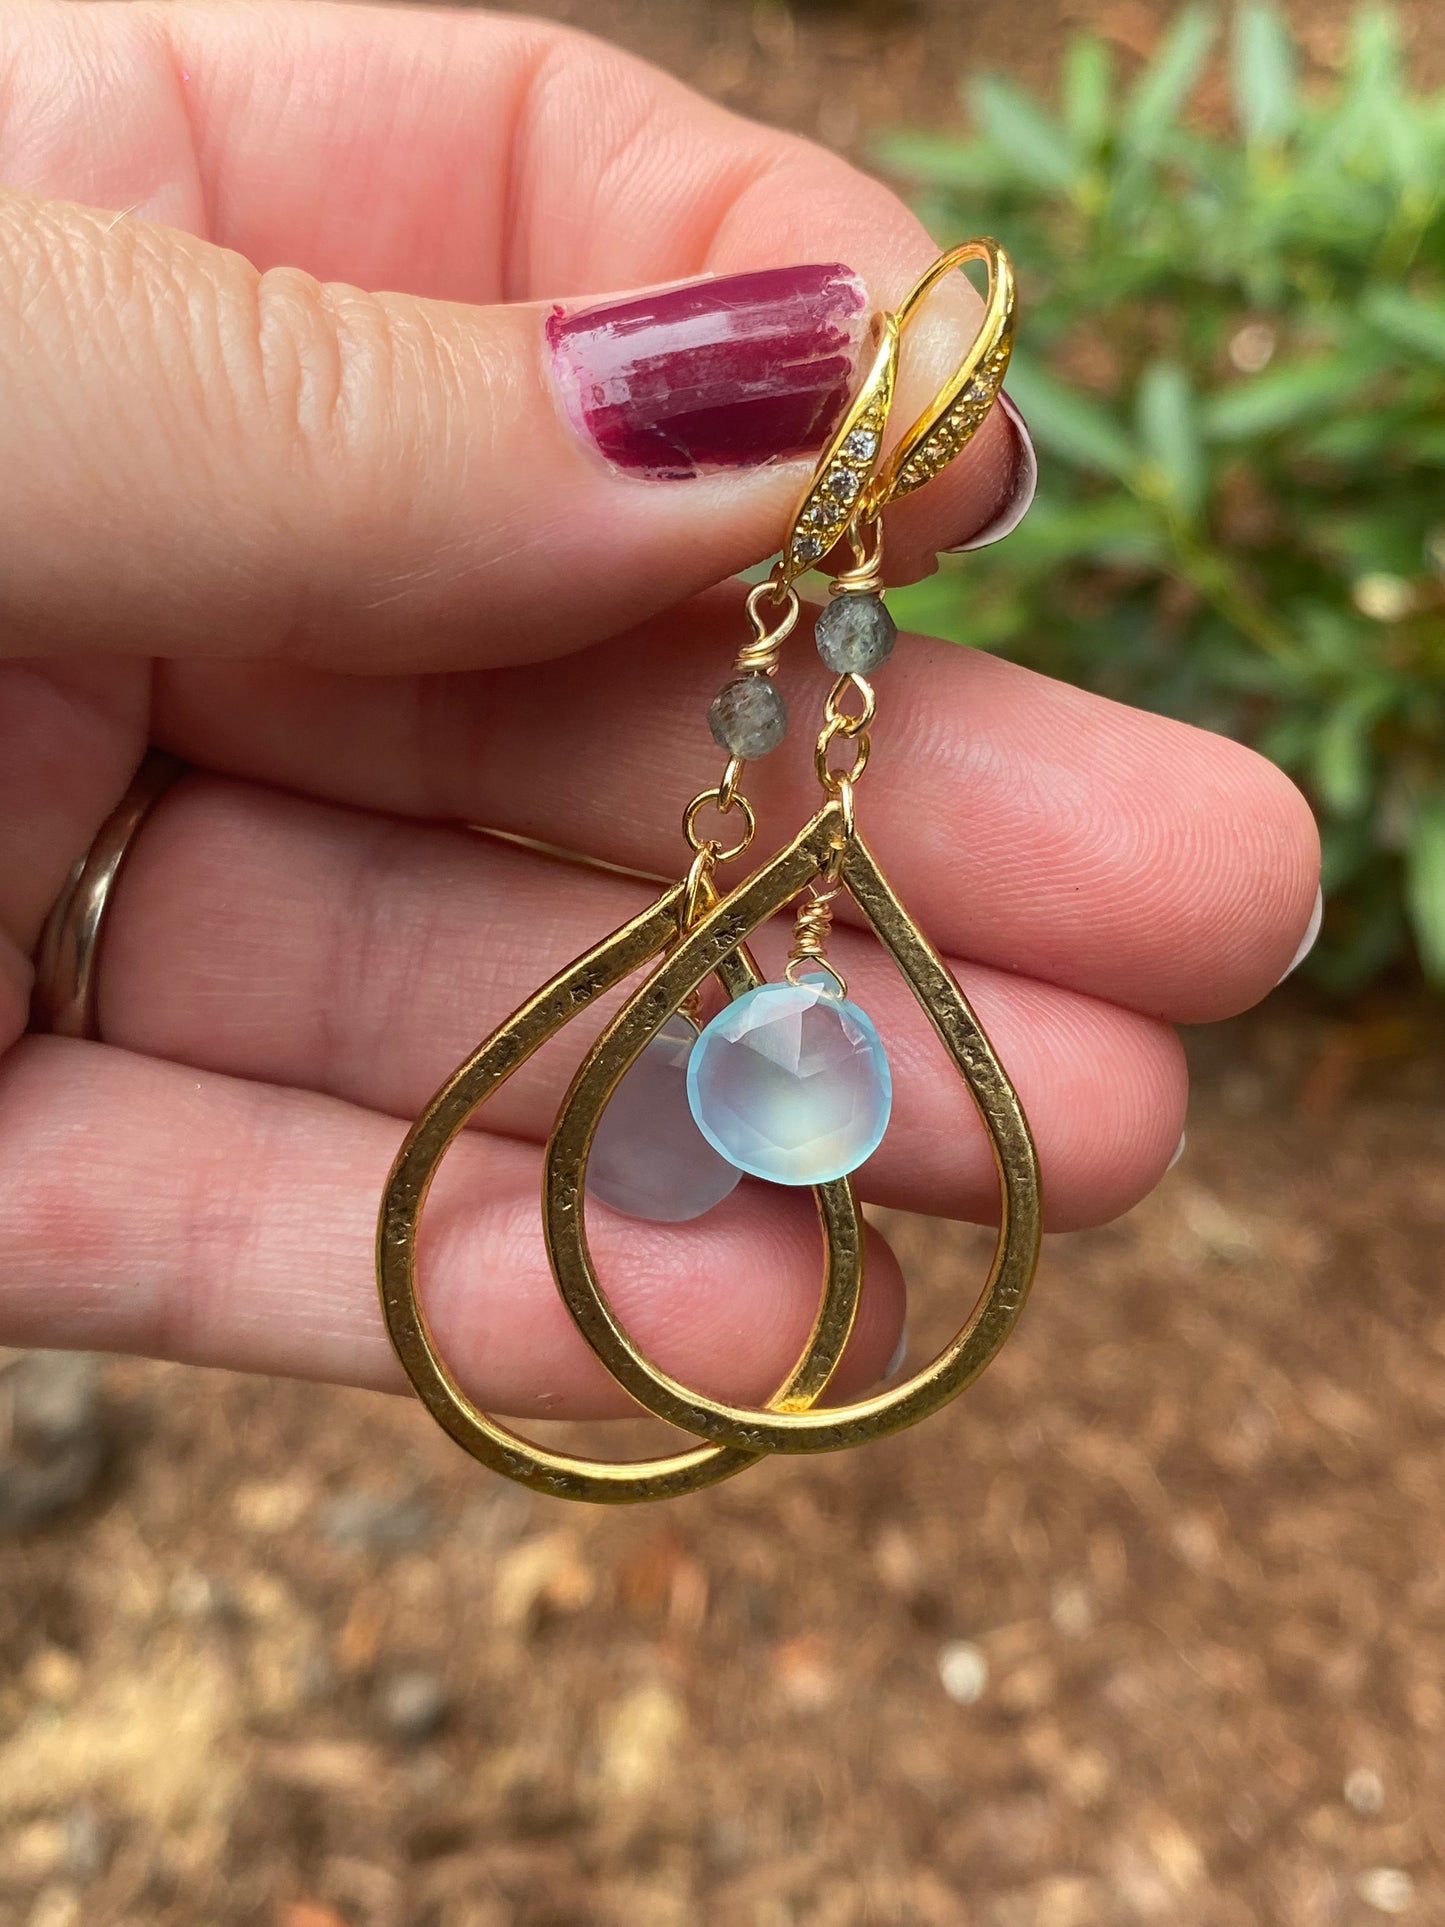 Heart blue chalcedony stone, gold metal hoop earrings. - Andria Bieber Designs 